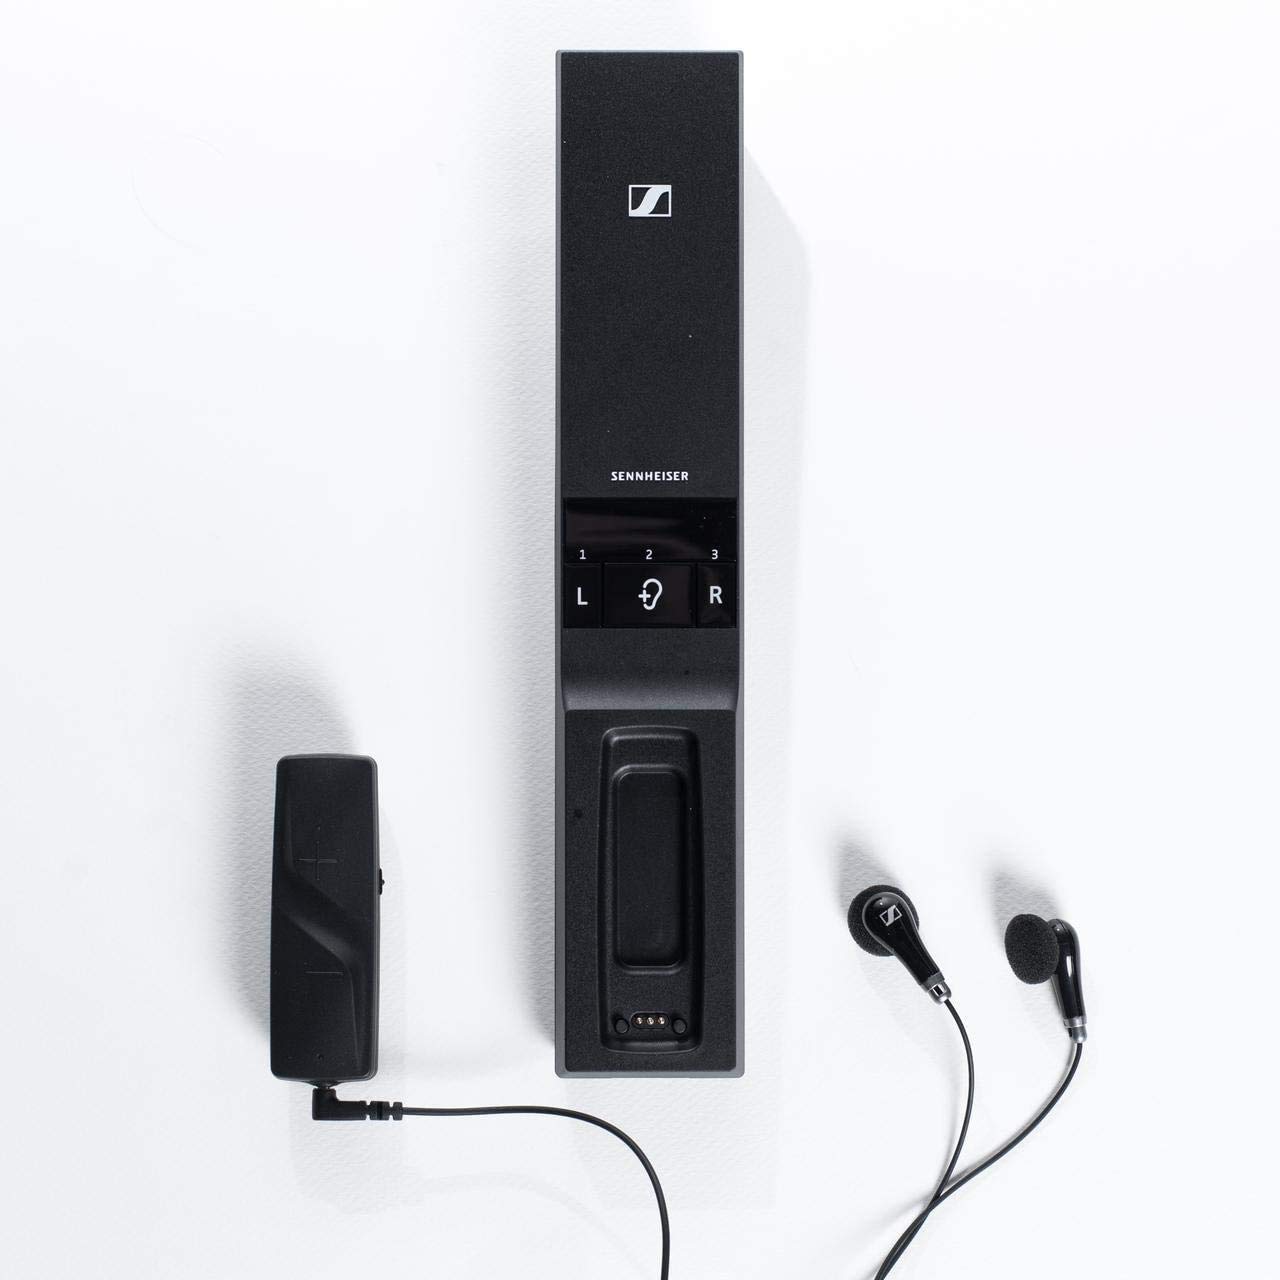 Sennheiser Consumer Audio فليكس 5000 سماعة لاسلكية رقمية للاستماع للتلفزيون - اسود